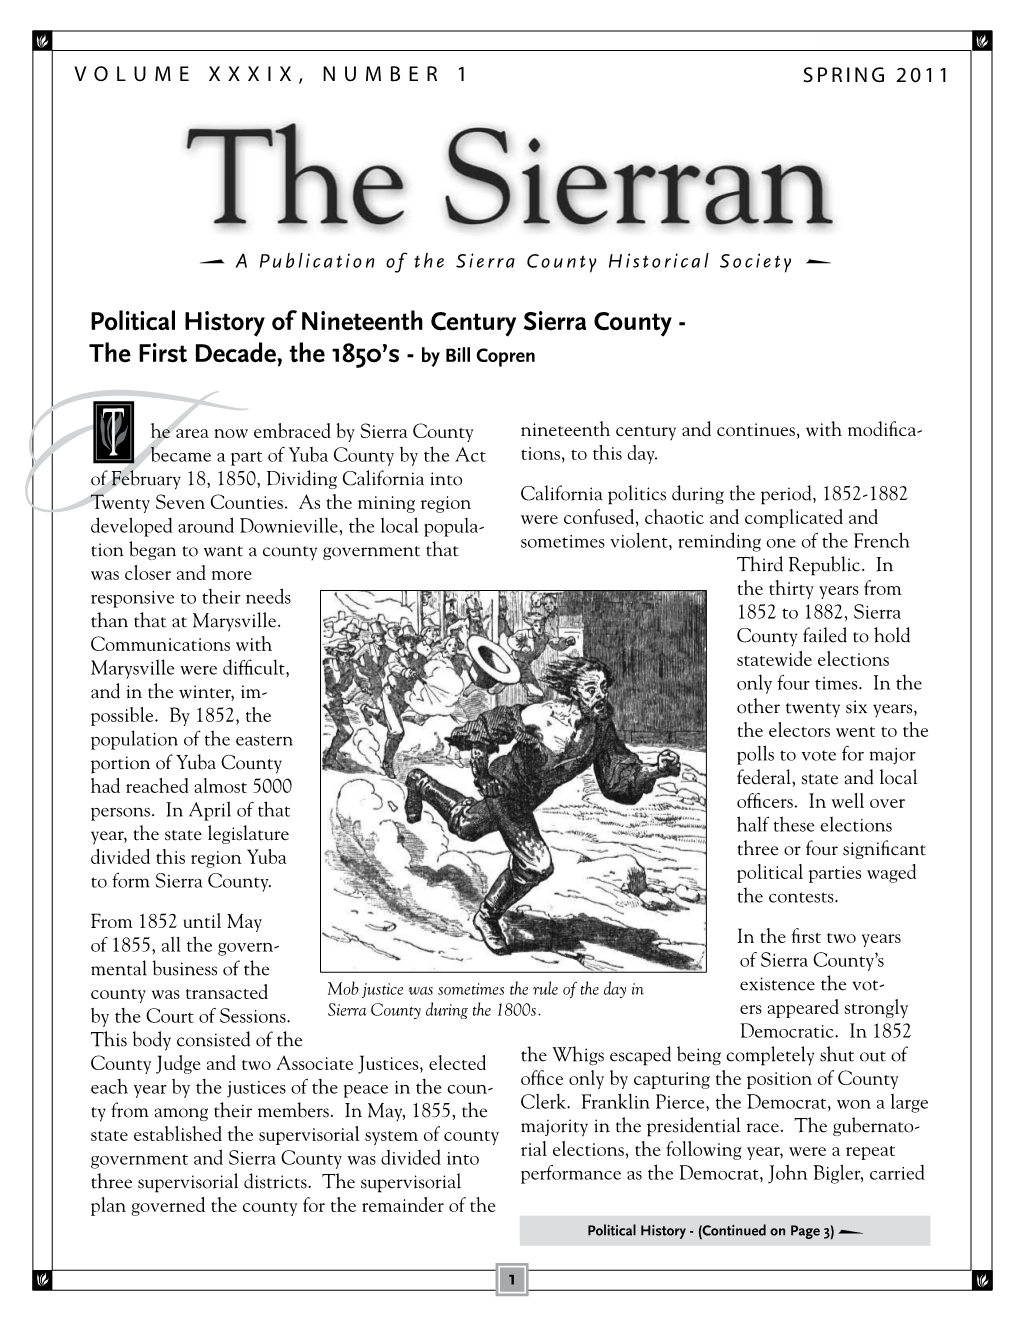 Sierran Spring 2011   the Sierra County Historical Society 